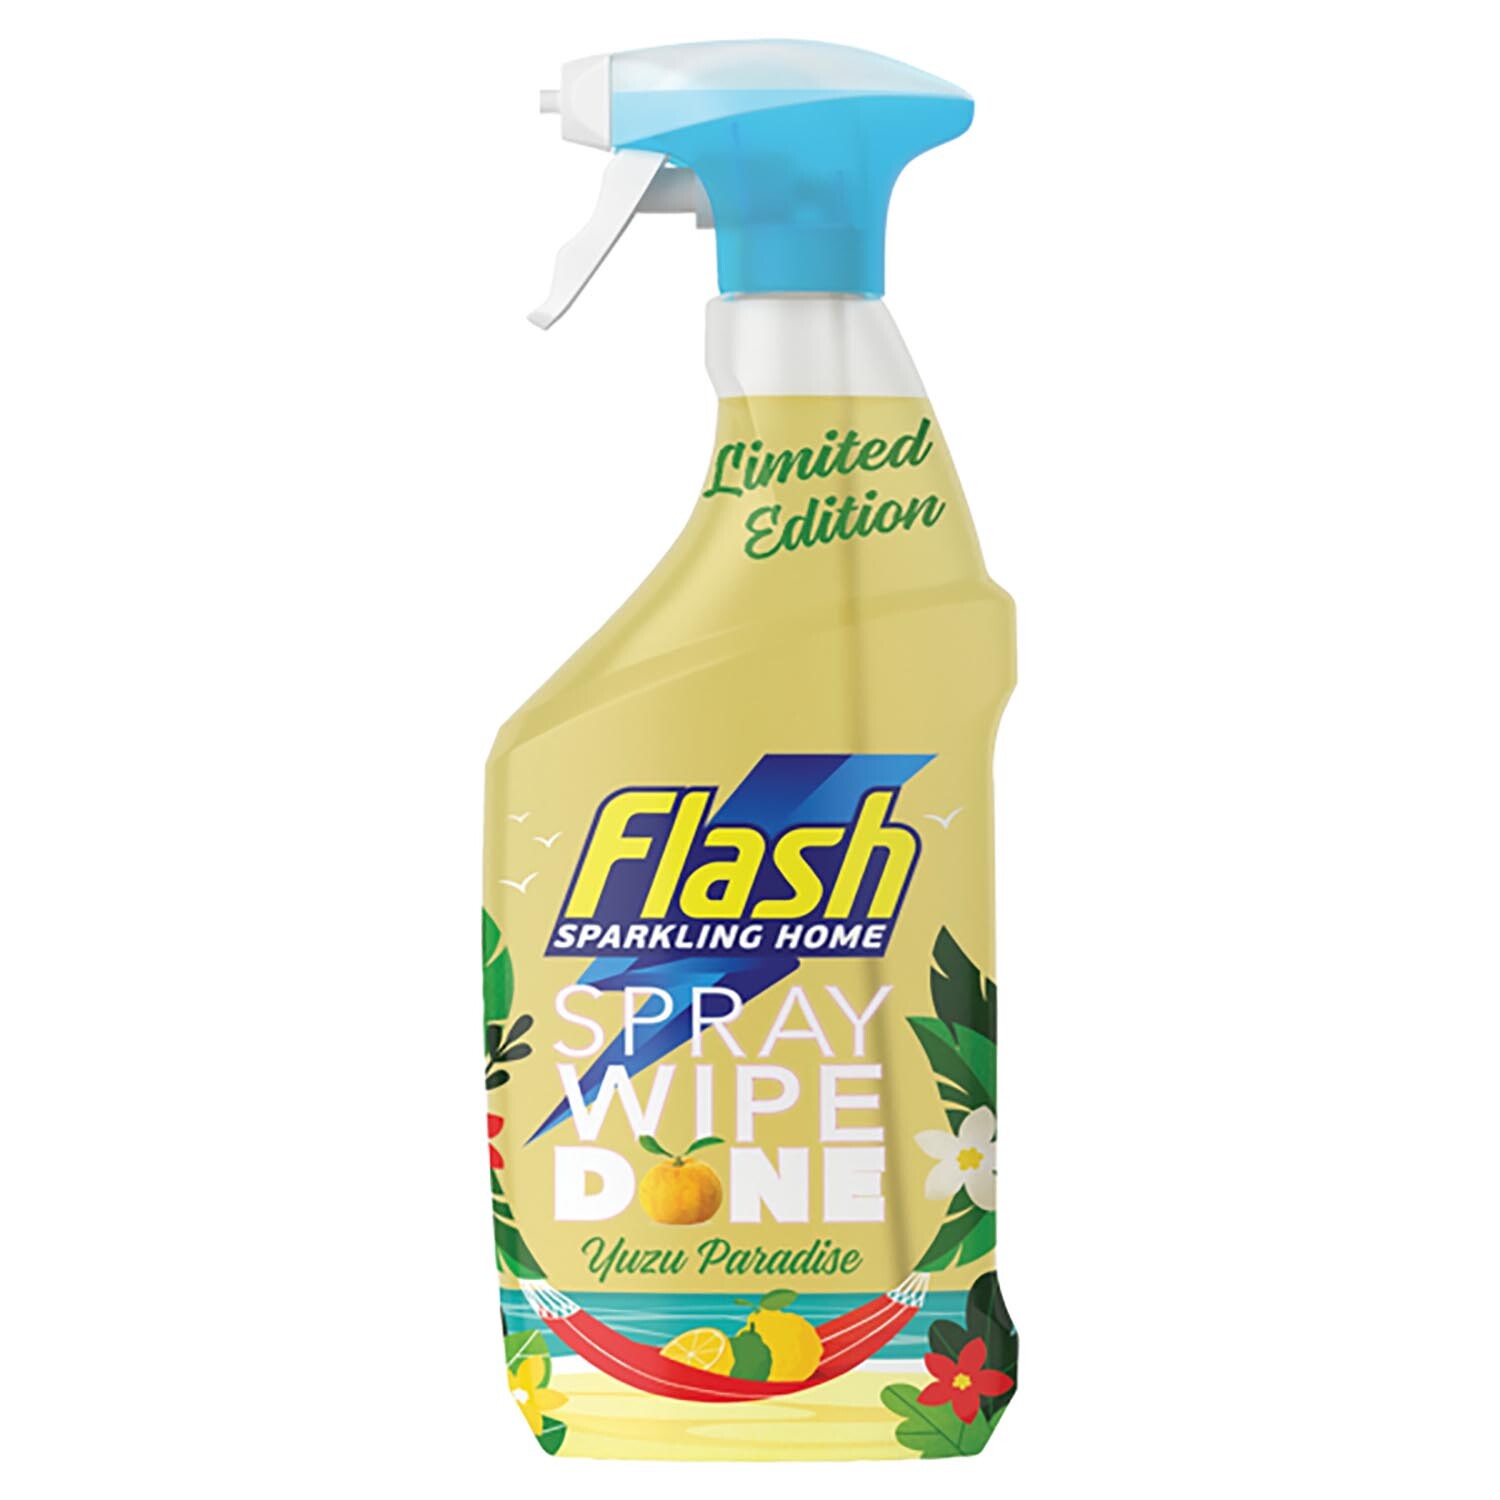 Flash Spray Wipe Done 800ml - Yuzu Paradise Image